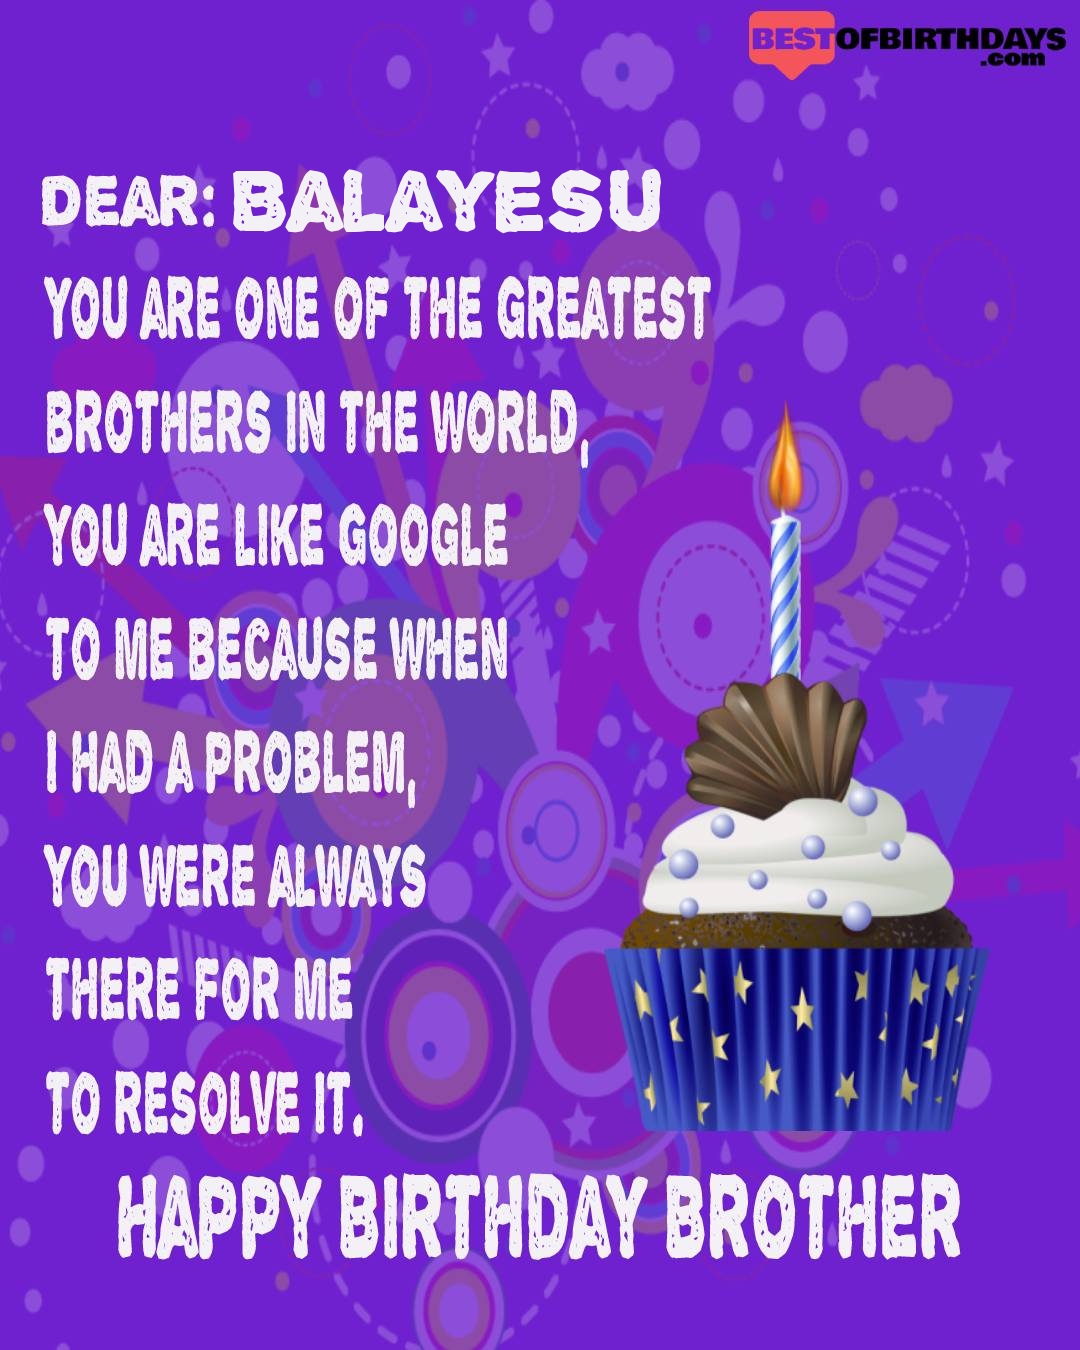 Happy birthday balayesu bhai brother bro